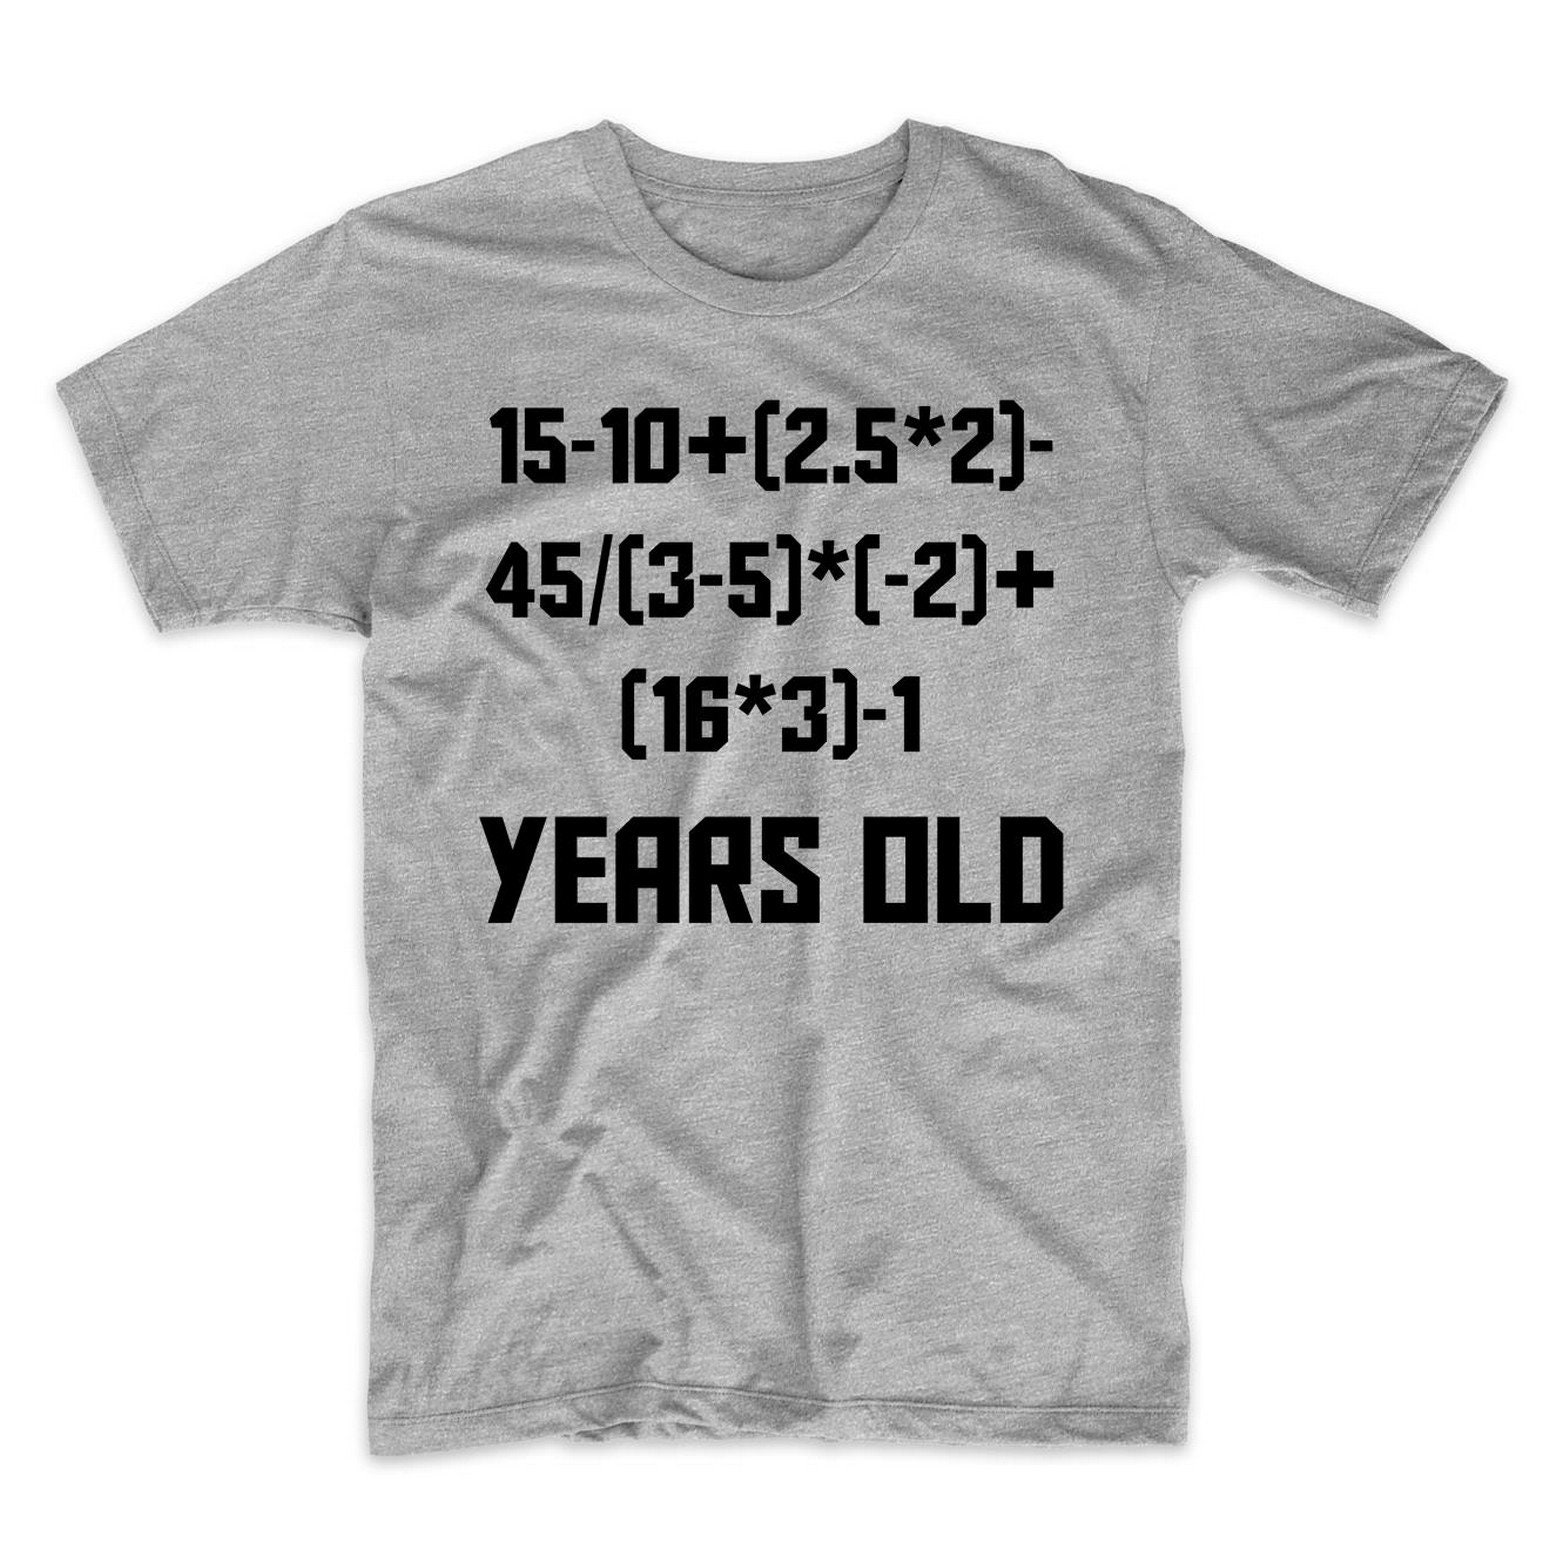 Girls 12th Birthday Countdown T-Shirt Funny Gift Birthday Gift 12 Year Old  Girls, Happy Birthday 12 Years Old, Gift for 12 Year Olds Kids T-Shirt  for Sale by larspat